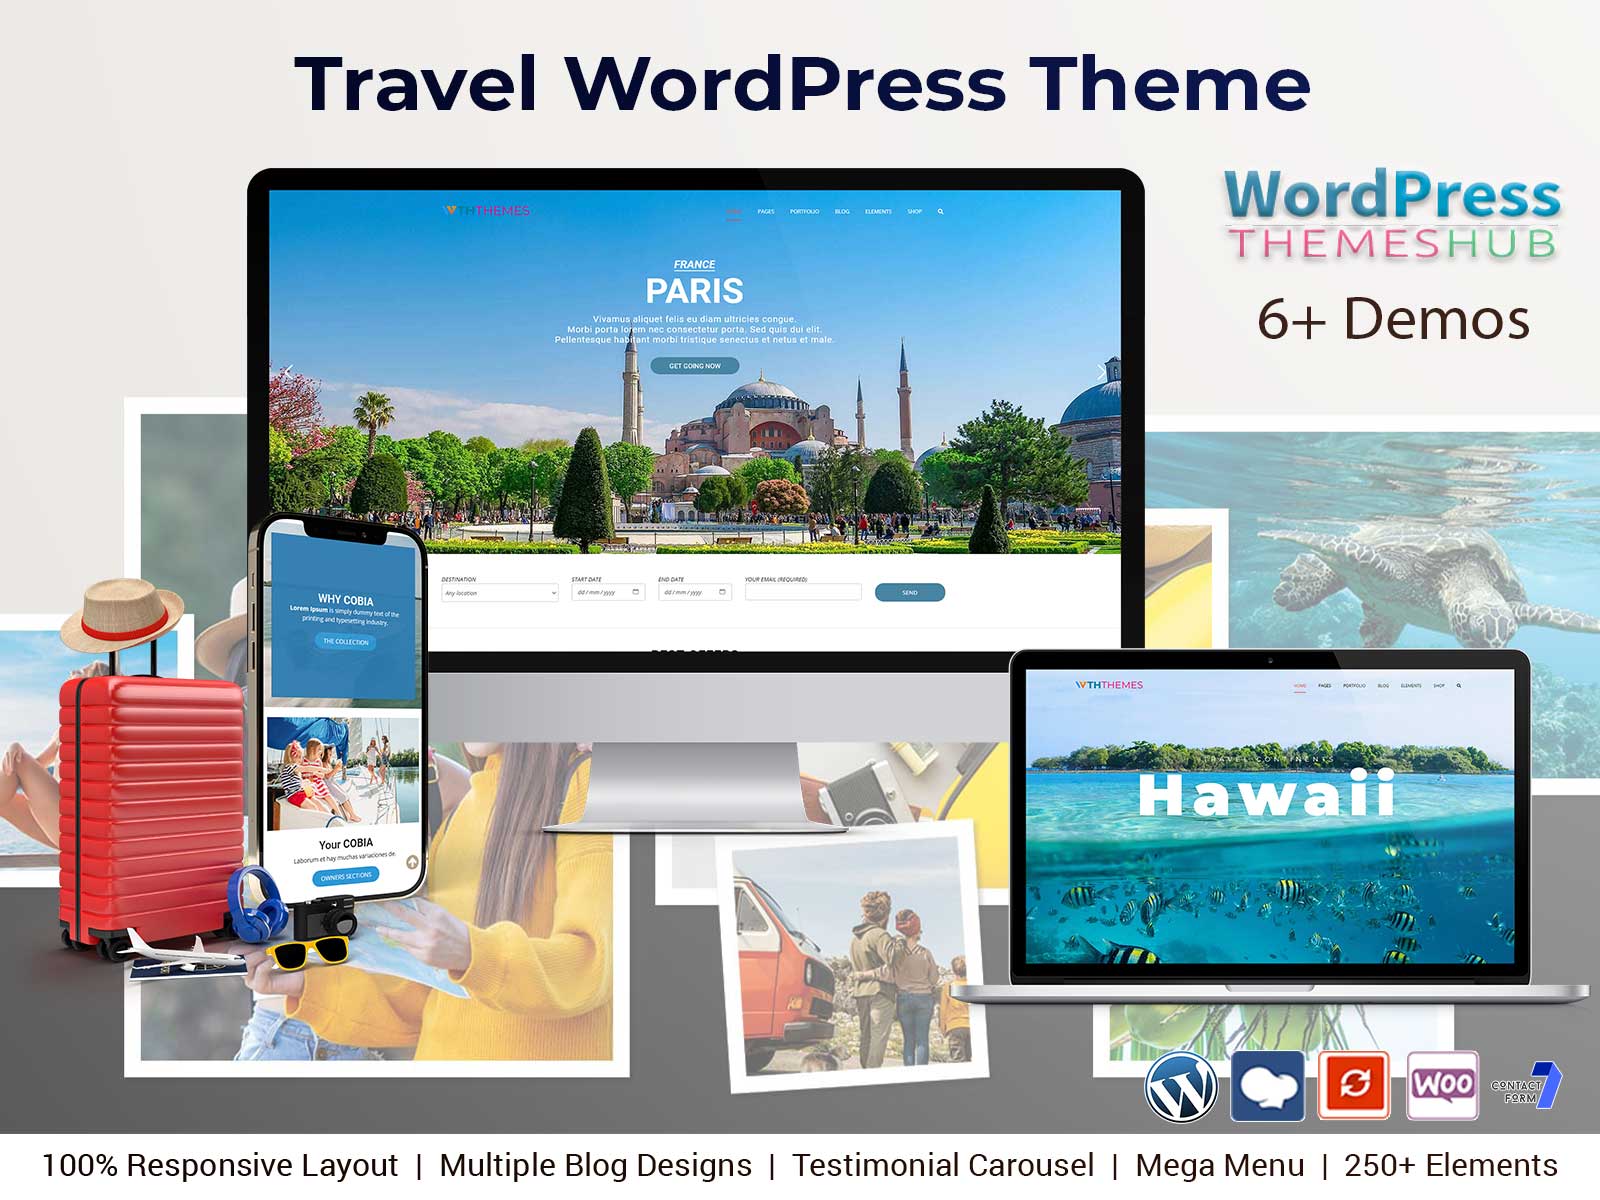 WordPress Travel Theme To Make Travel Websites